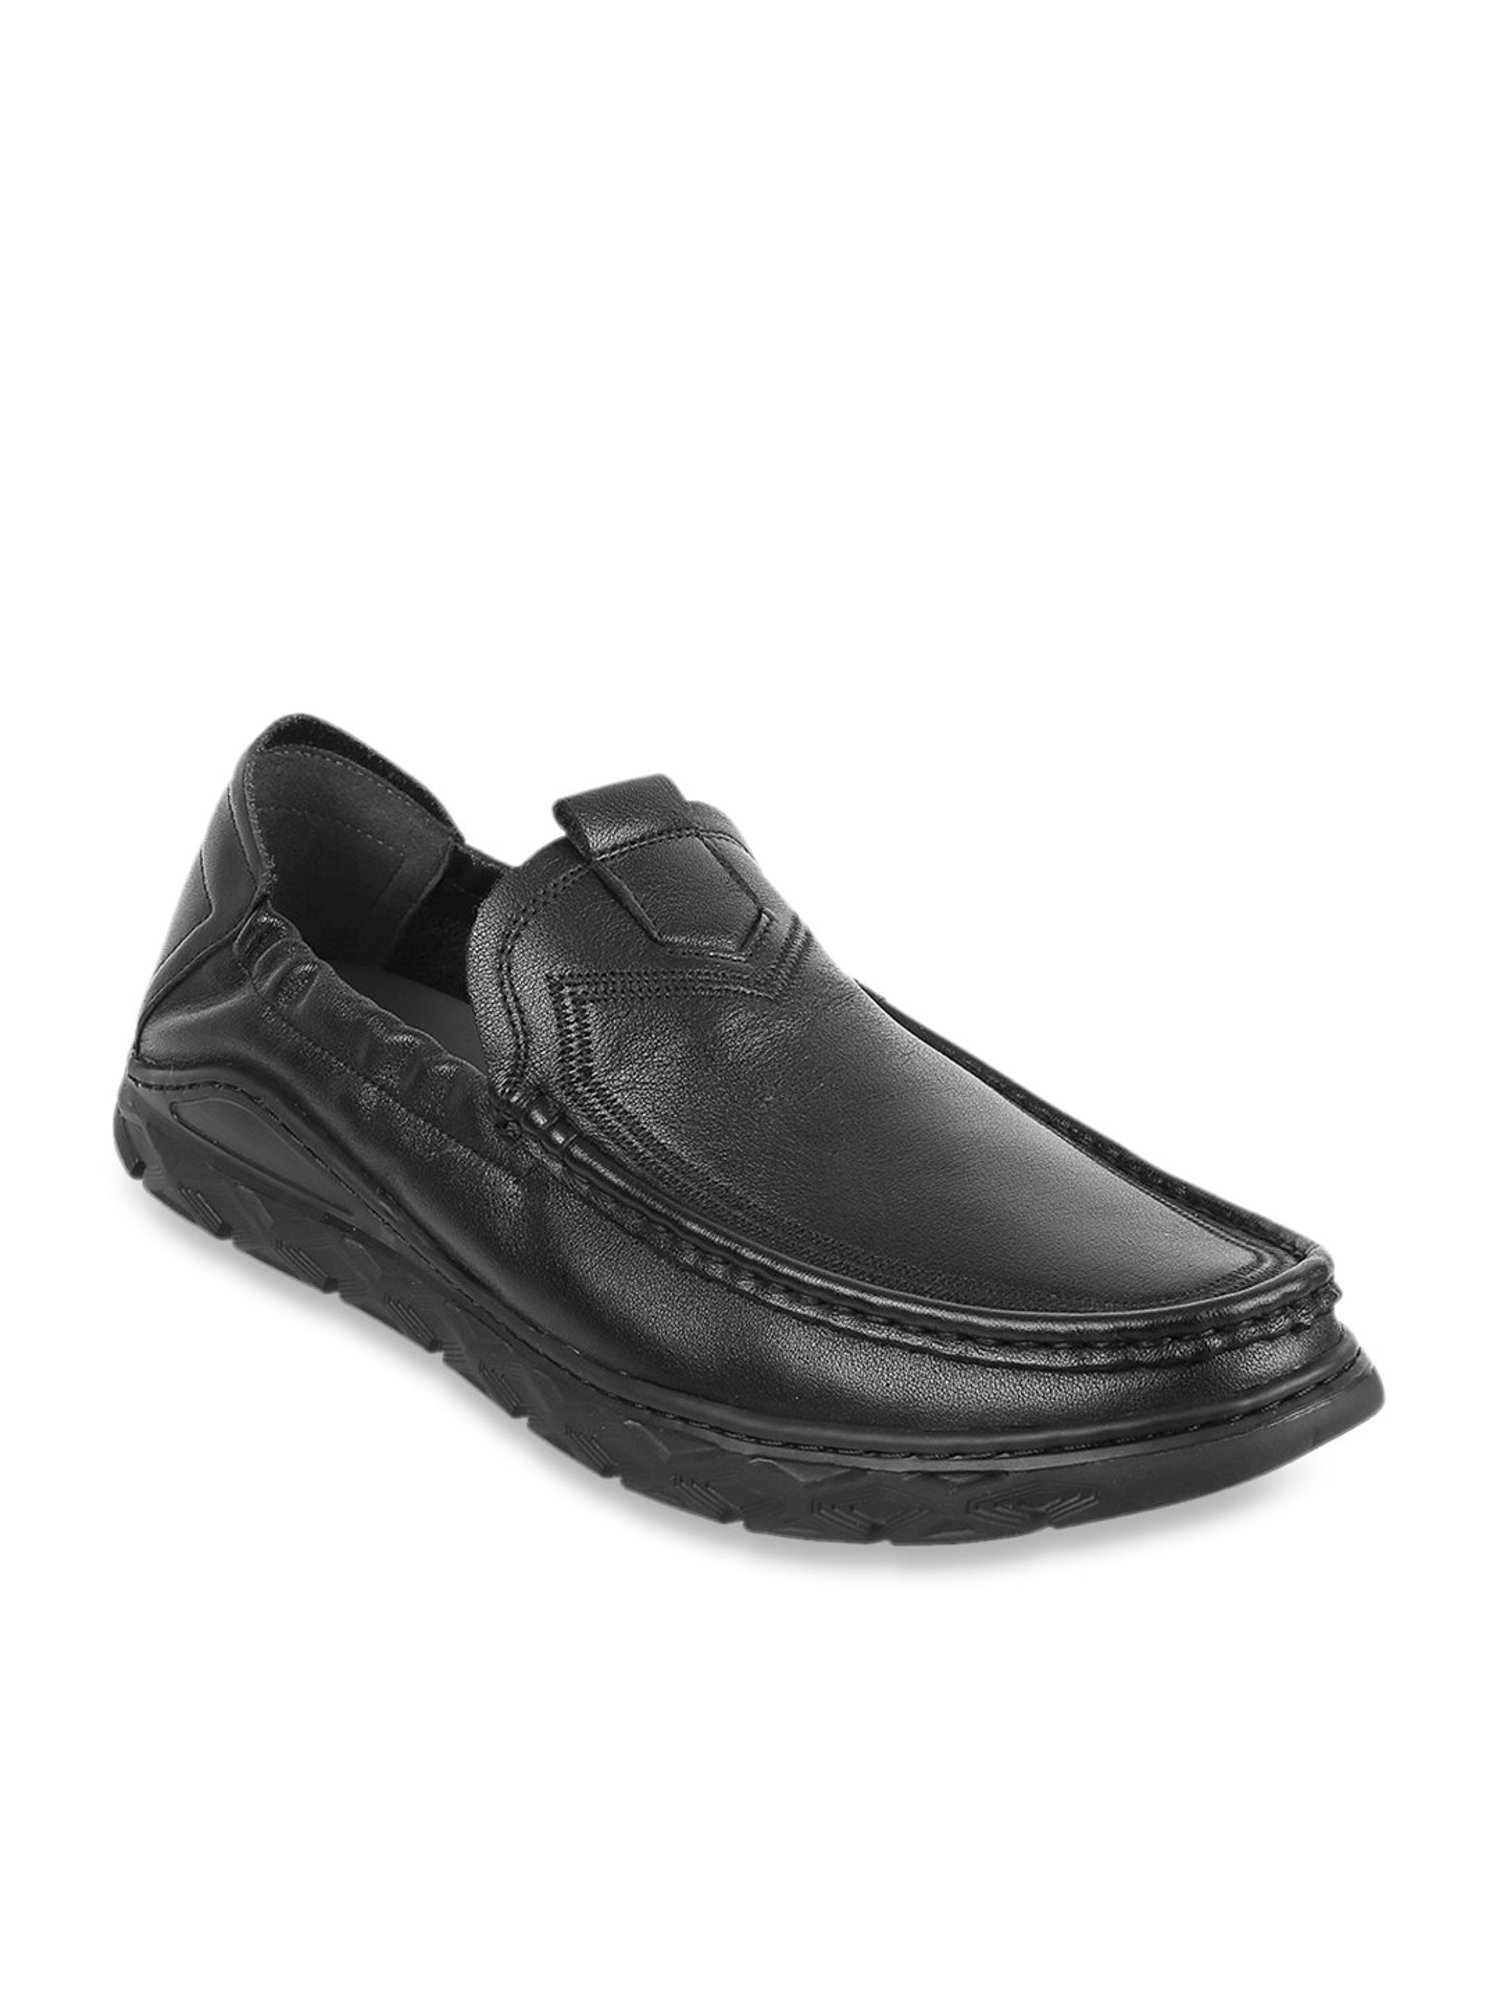 j fontini casual shoes